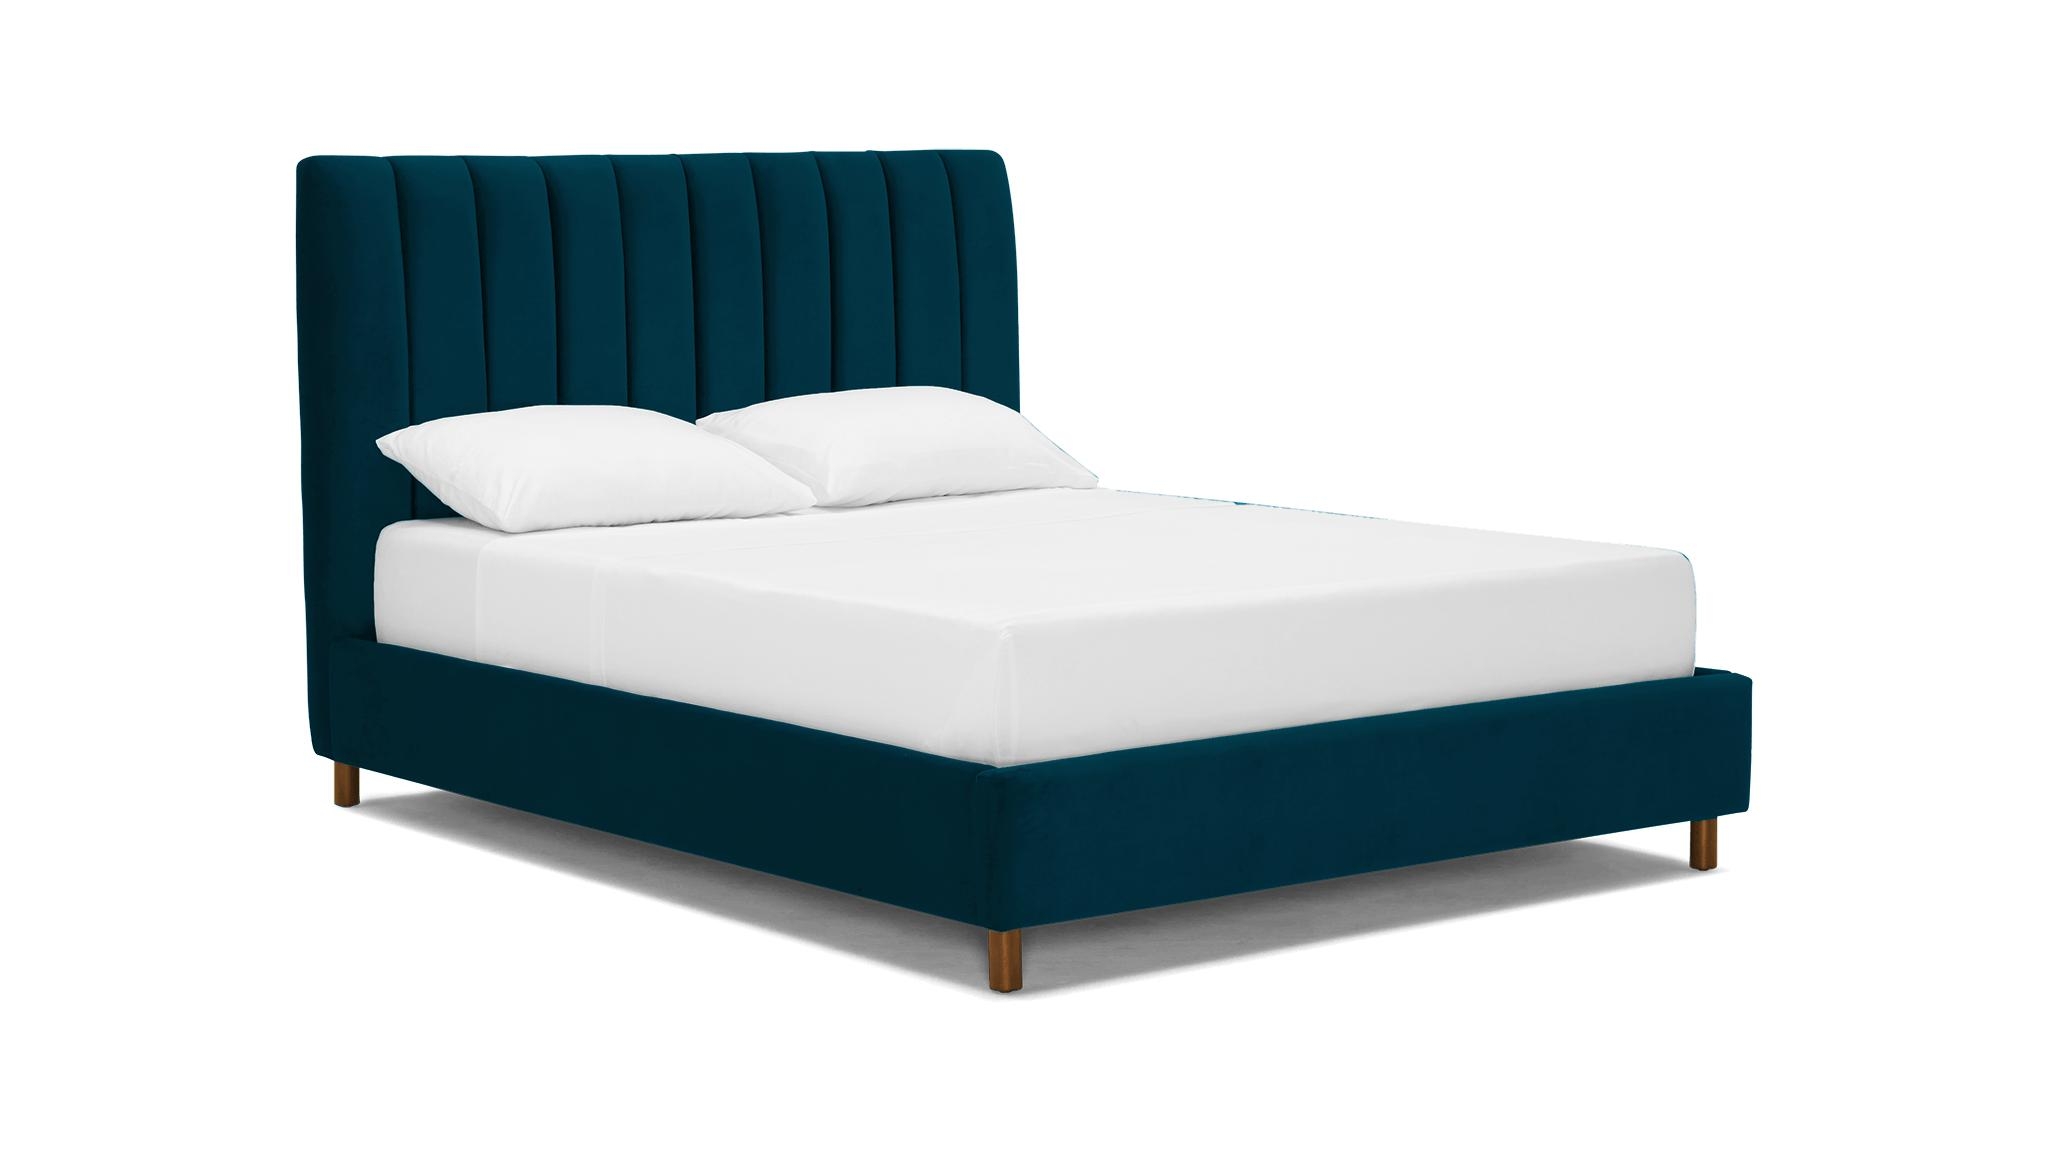 Blue Lotta Mid Century Modern Bed - Key Largo Zenith Teal - Mocha - Cal King - Image 1